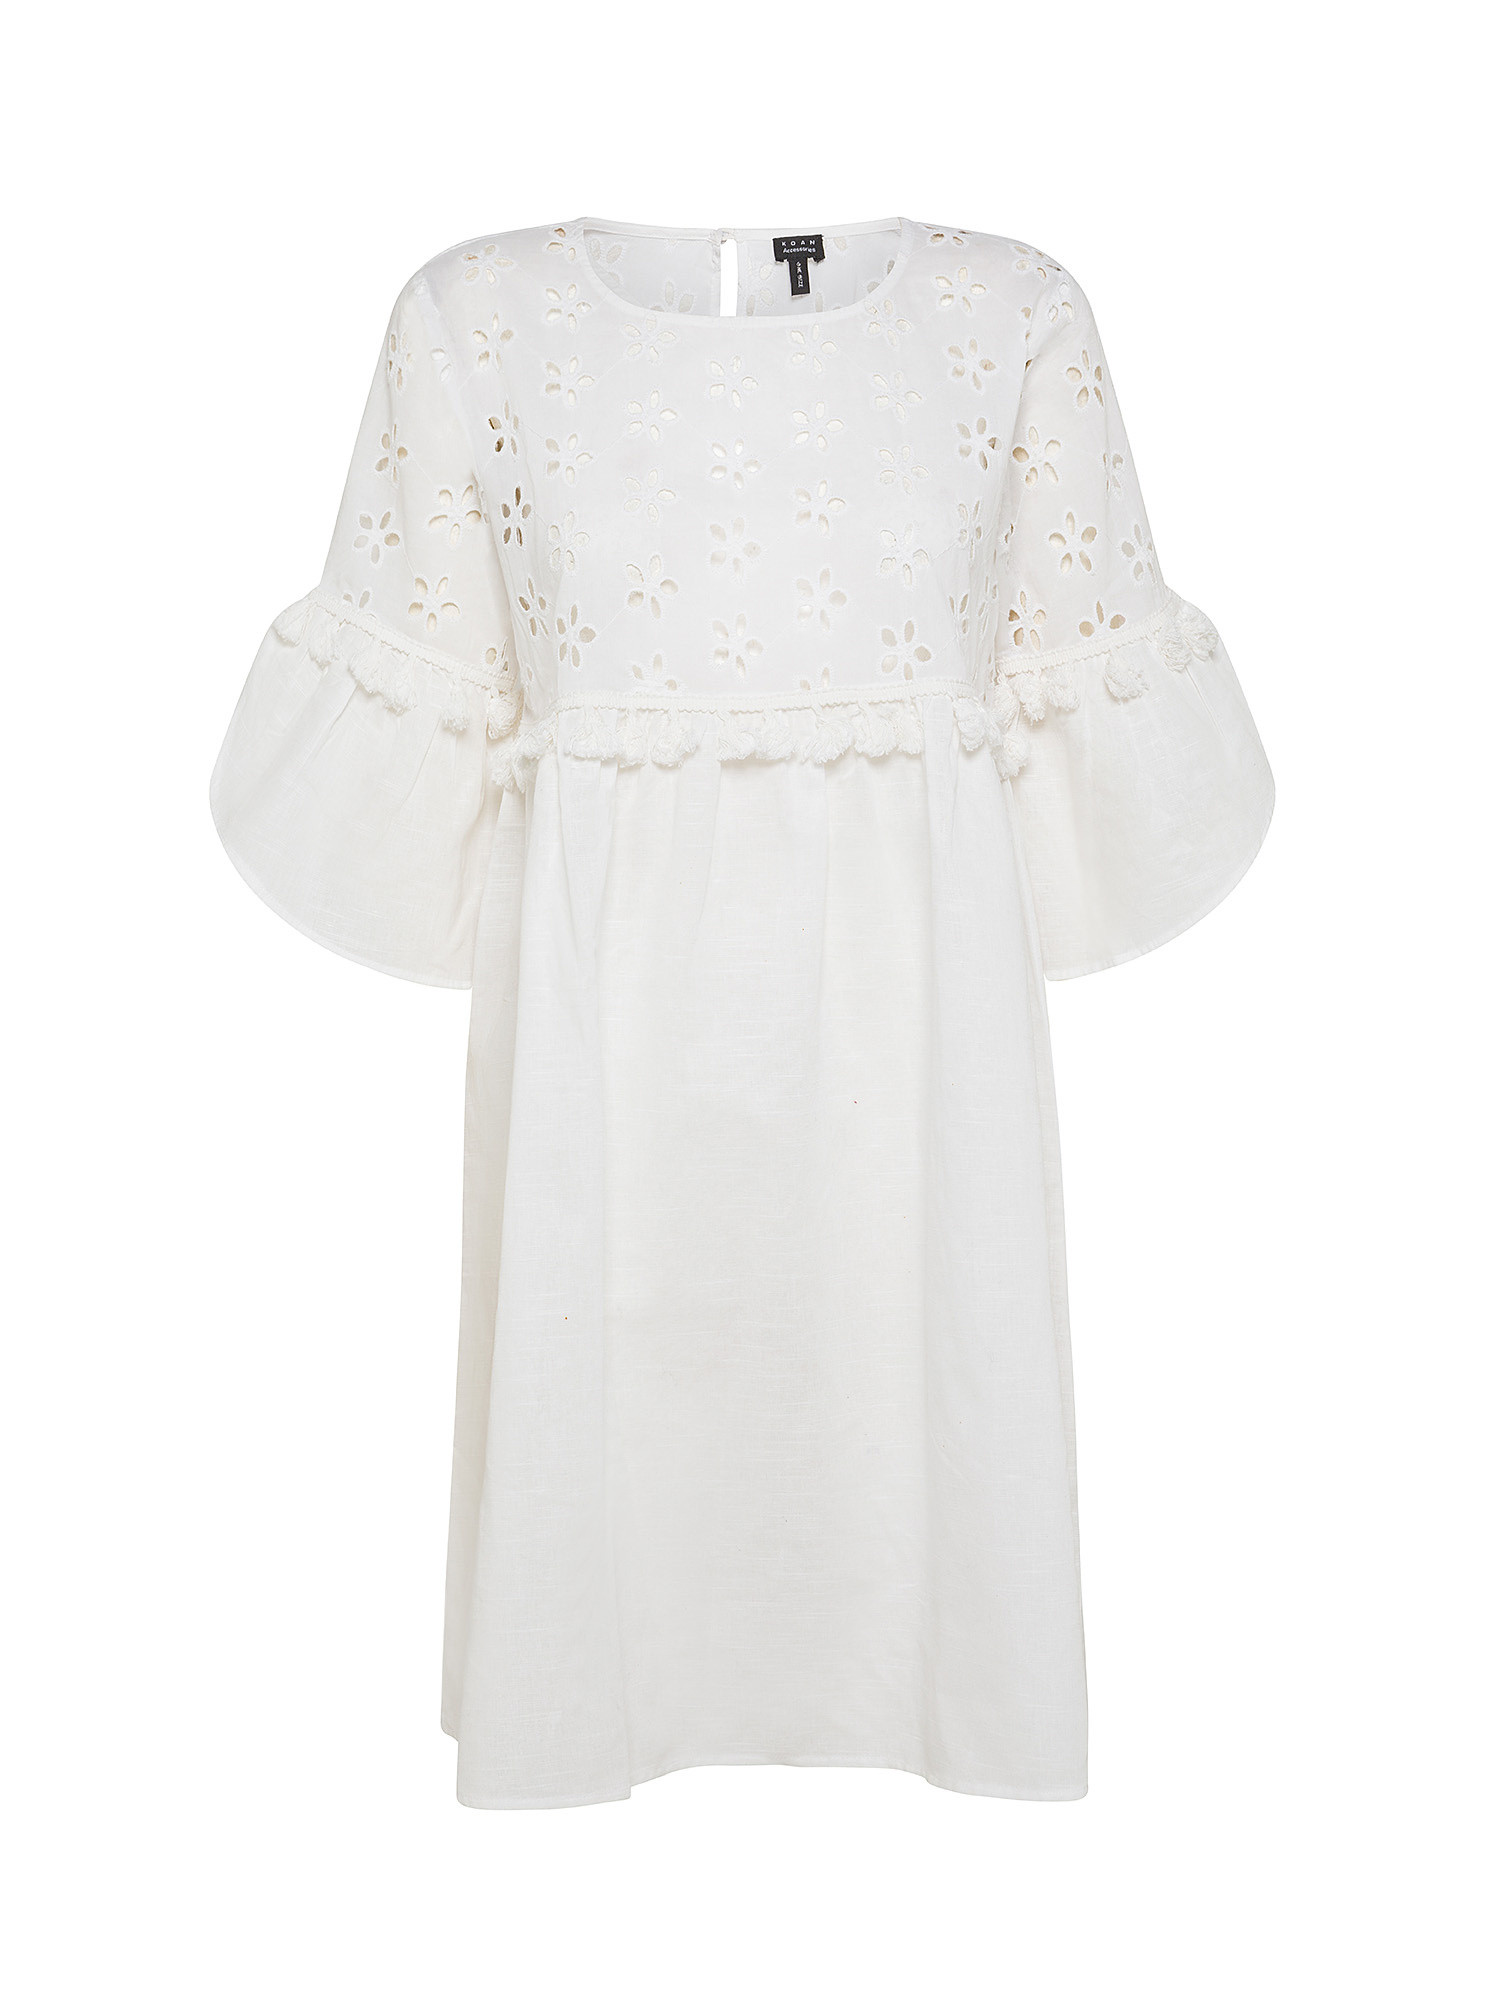 Koan - Sangallo dress, White, large image number 0